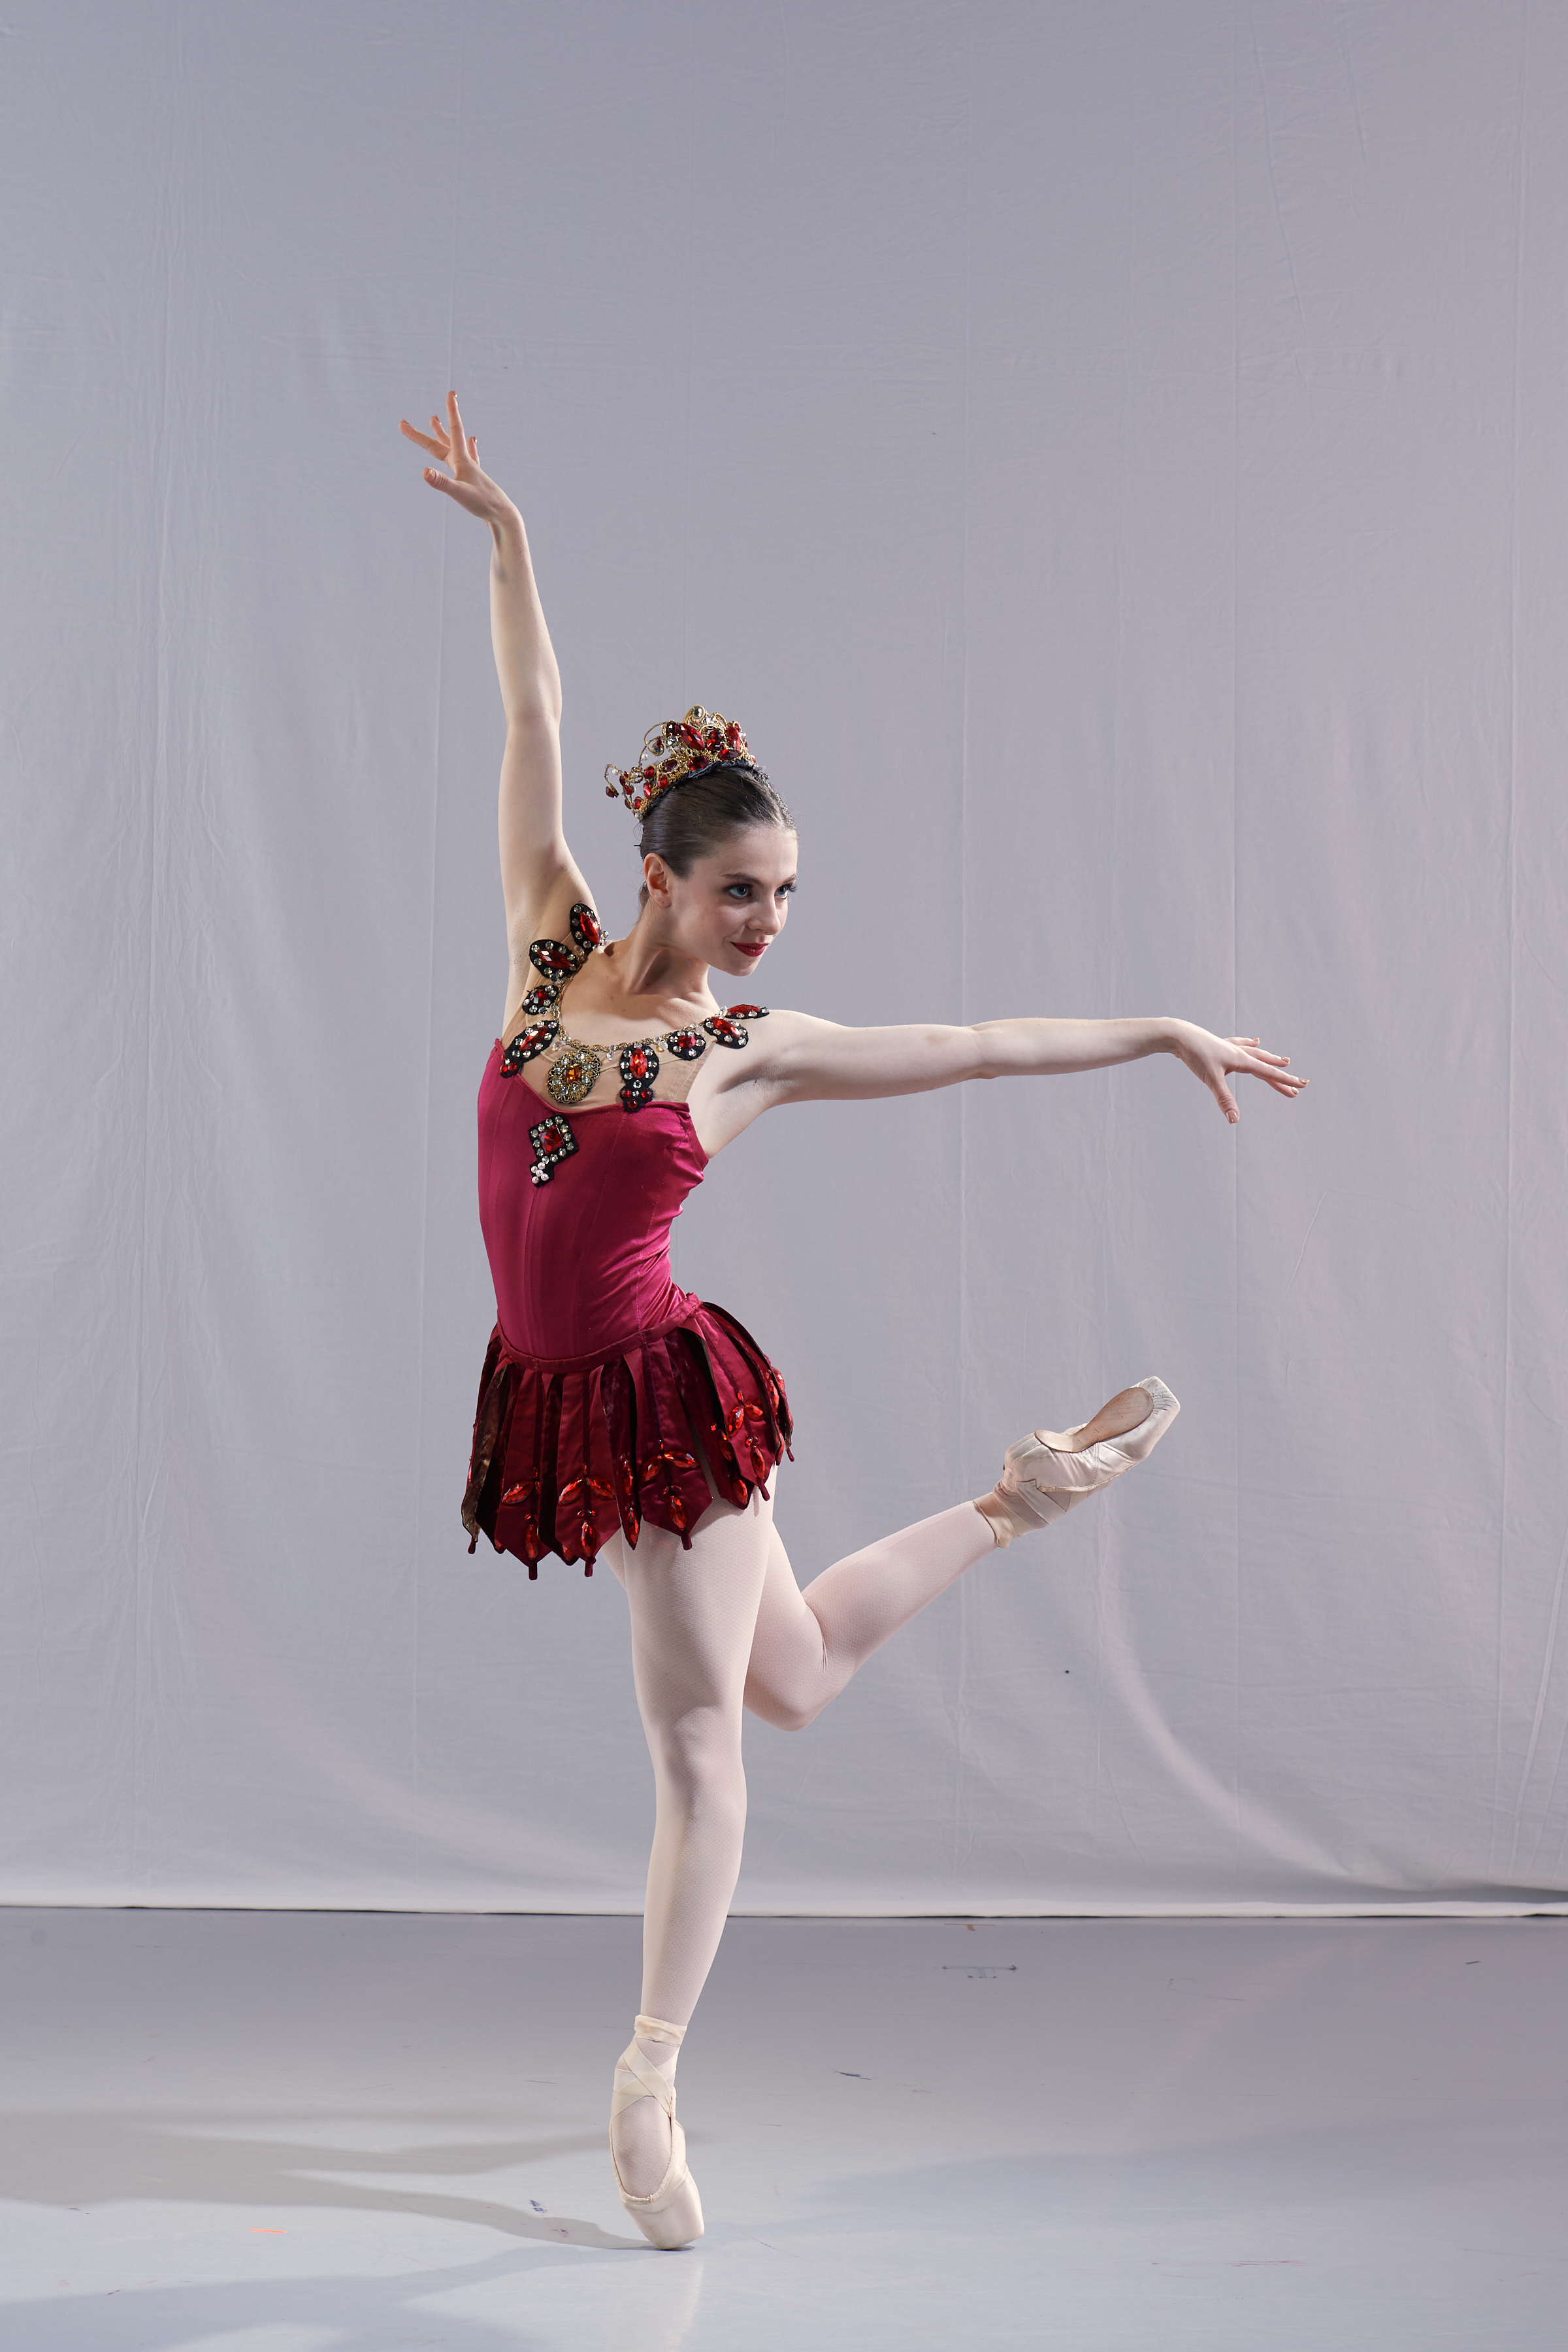 Nikita Boris as Rubies for Jewels | Cincinnati Ballet